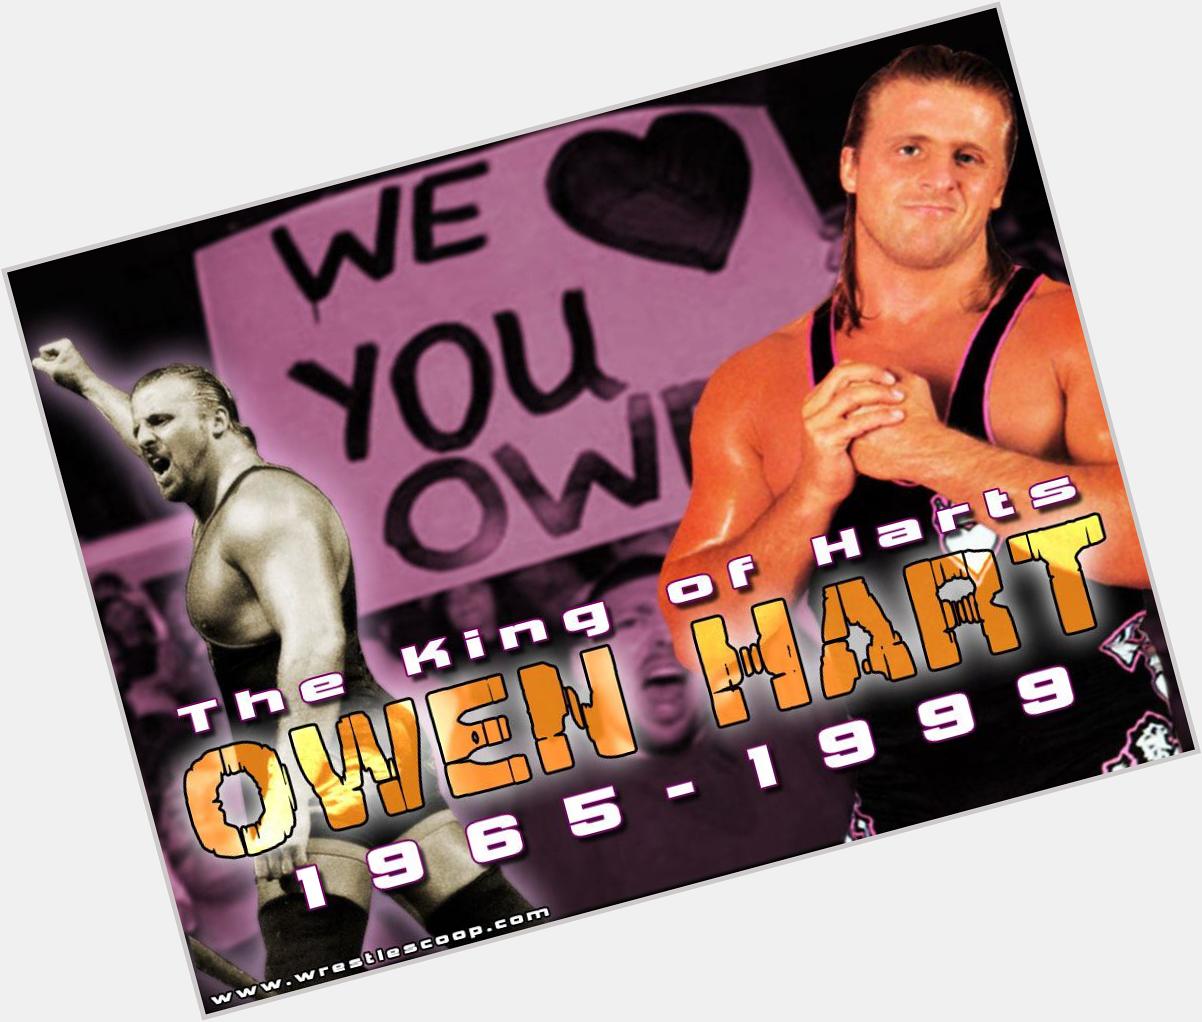 Happy Birthday Owen Hart RIP   